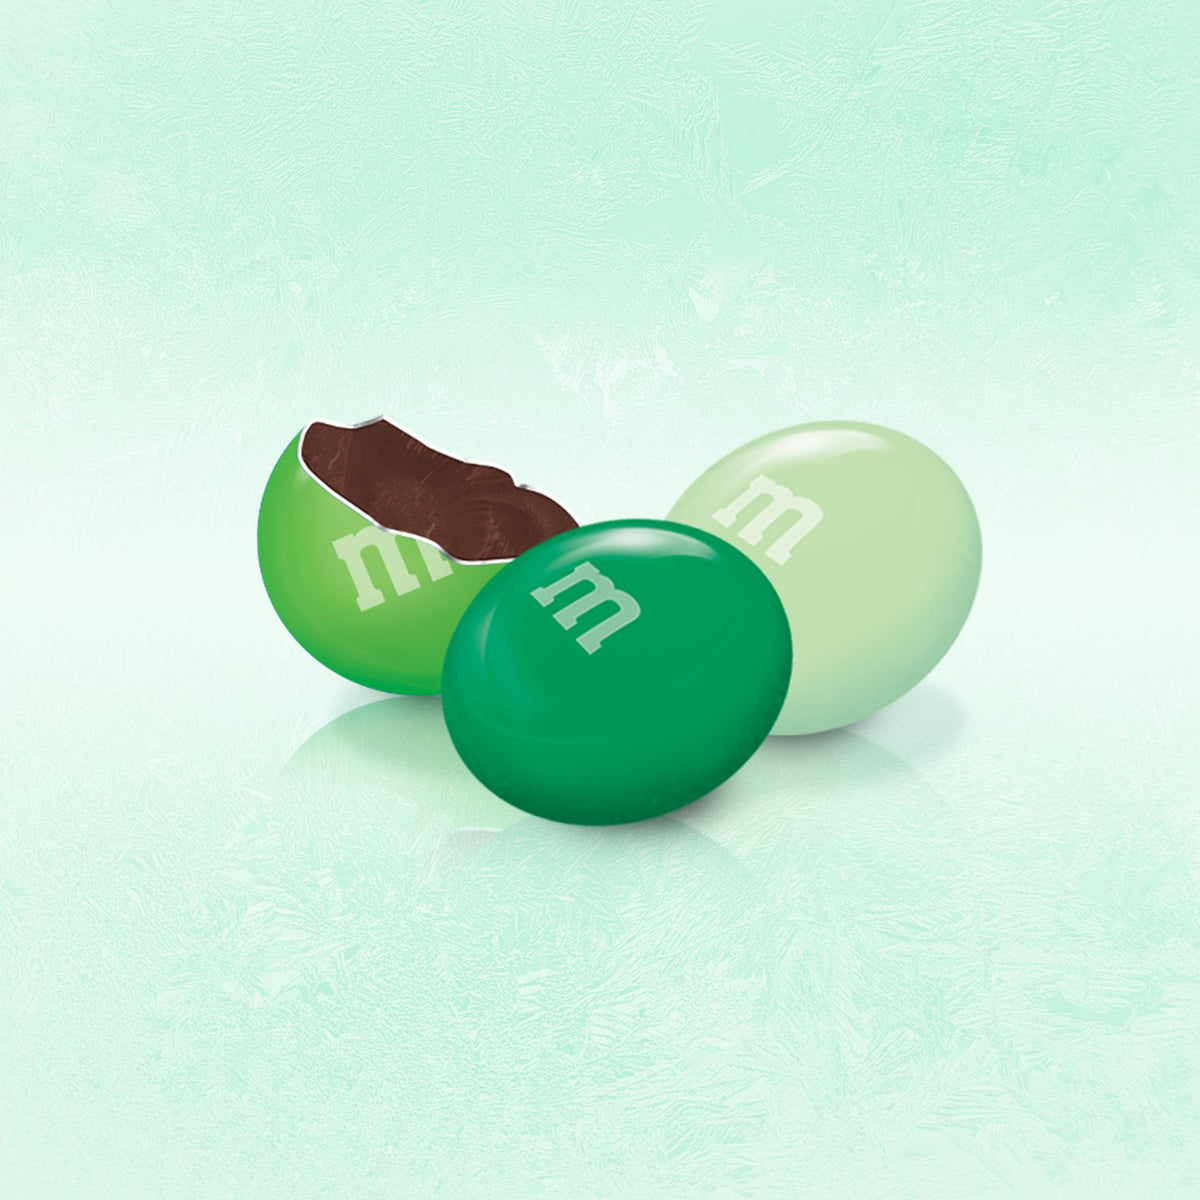 Crunchy Mint M&M's Candy: 8-Ounce Bag